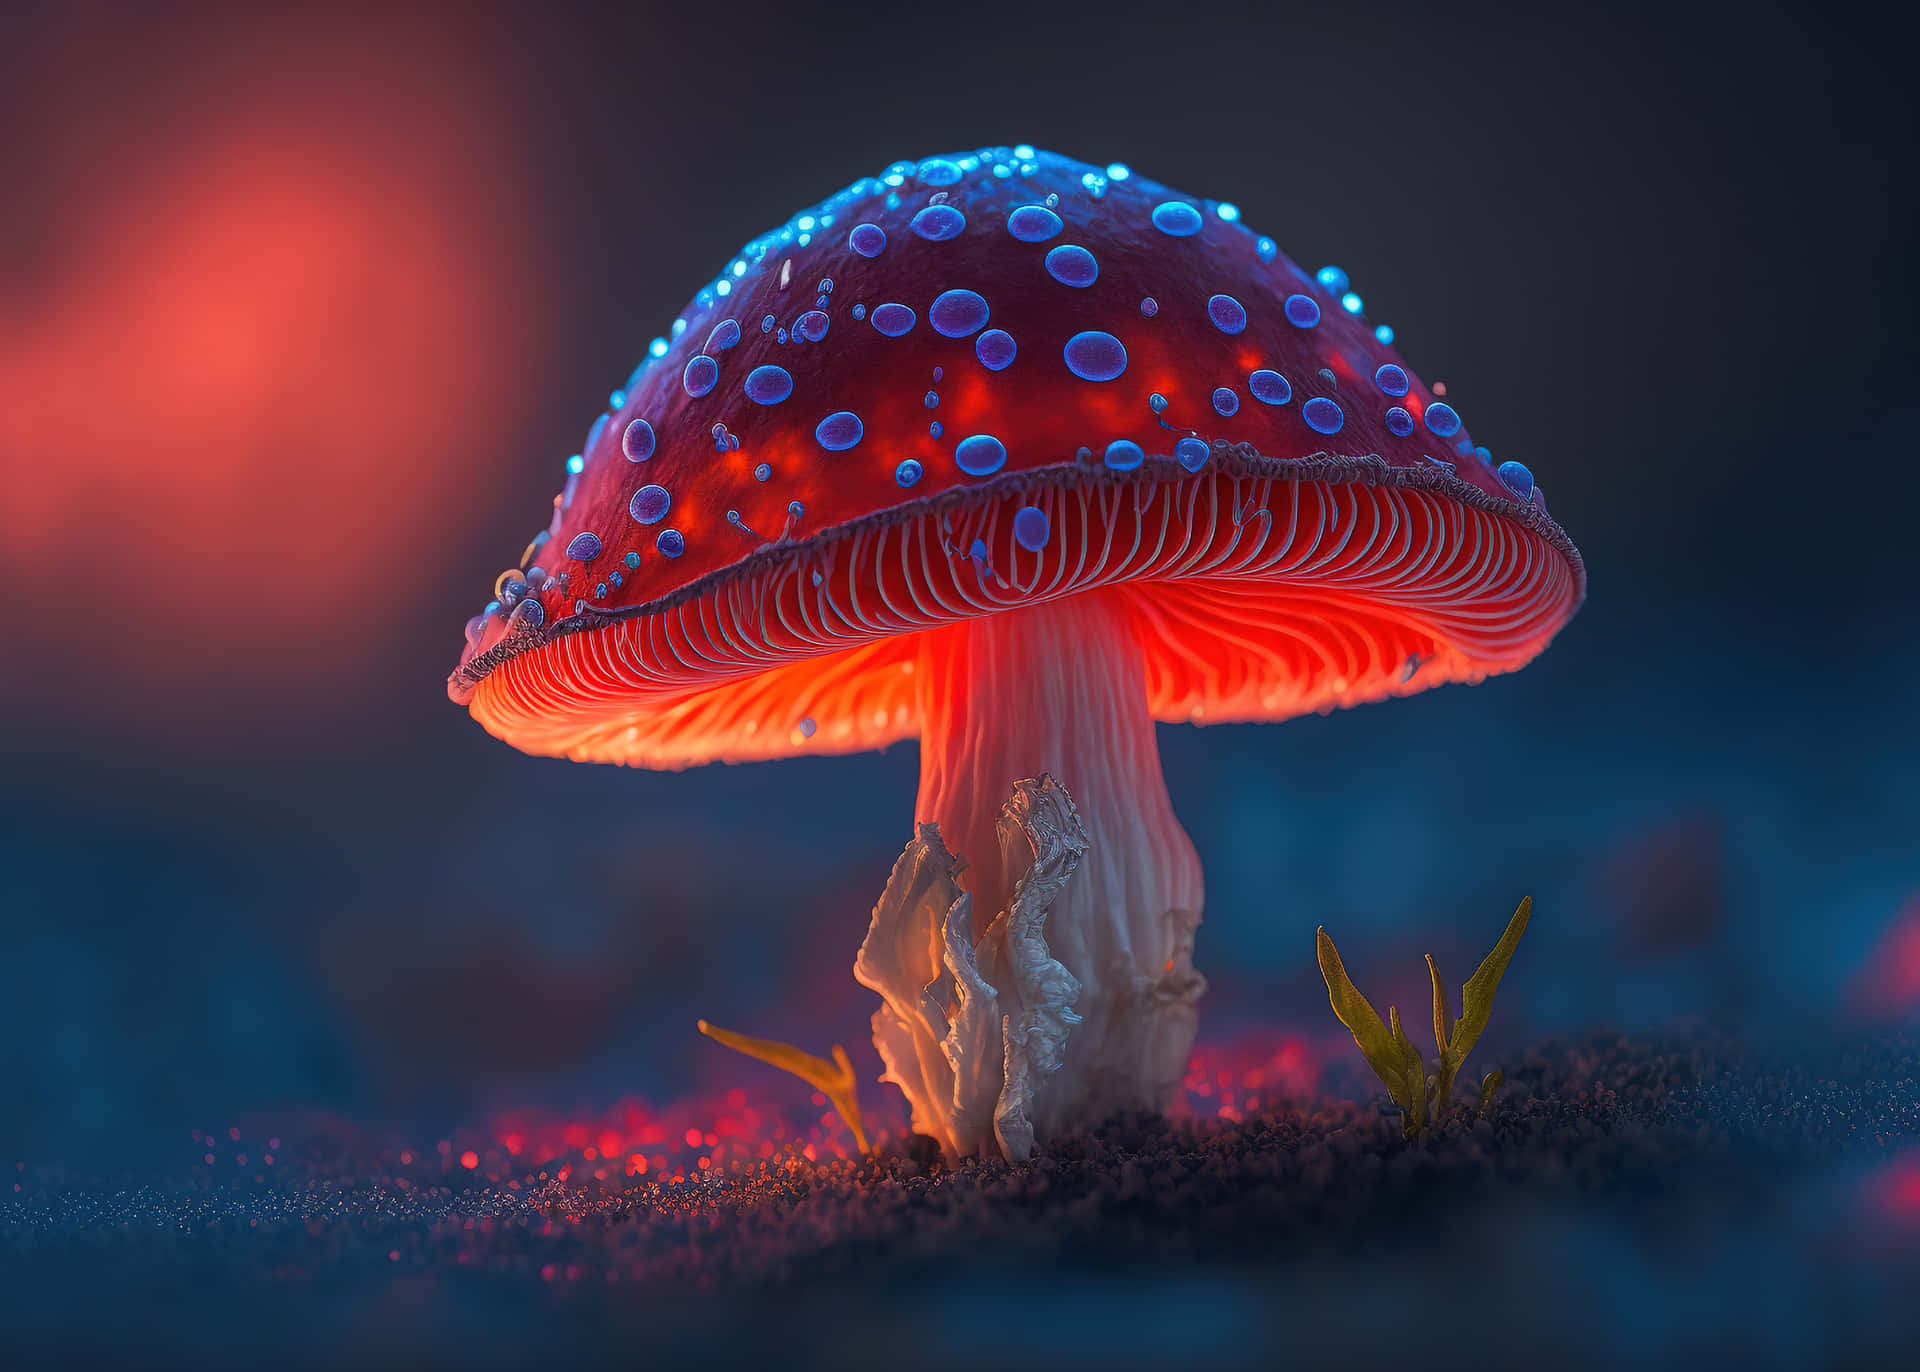 Enchanted Glowing Mushroom Art Wallpaper